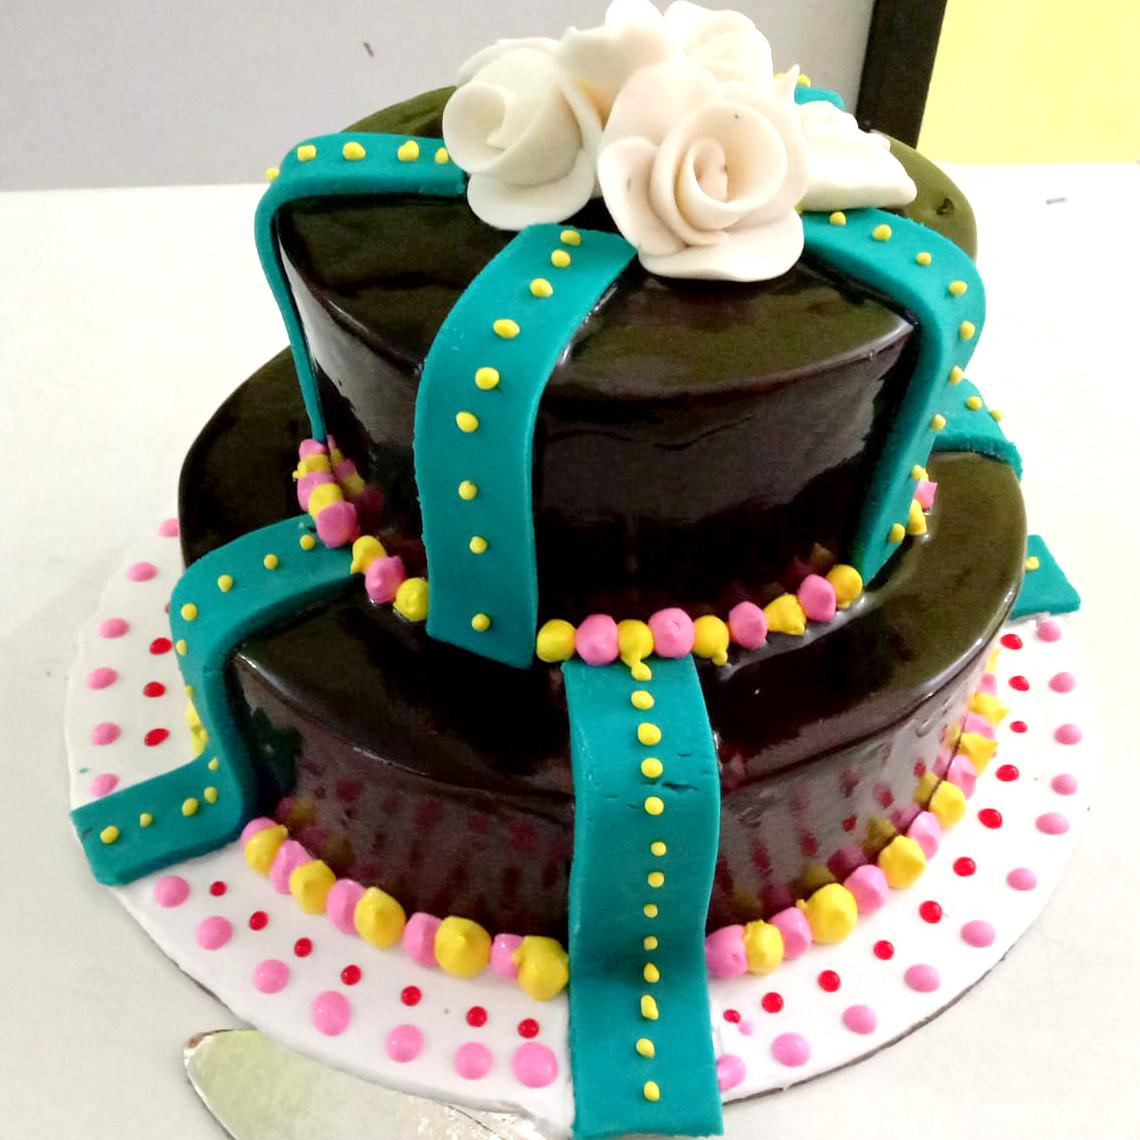 Chocolate sculpture cake 